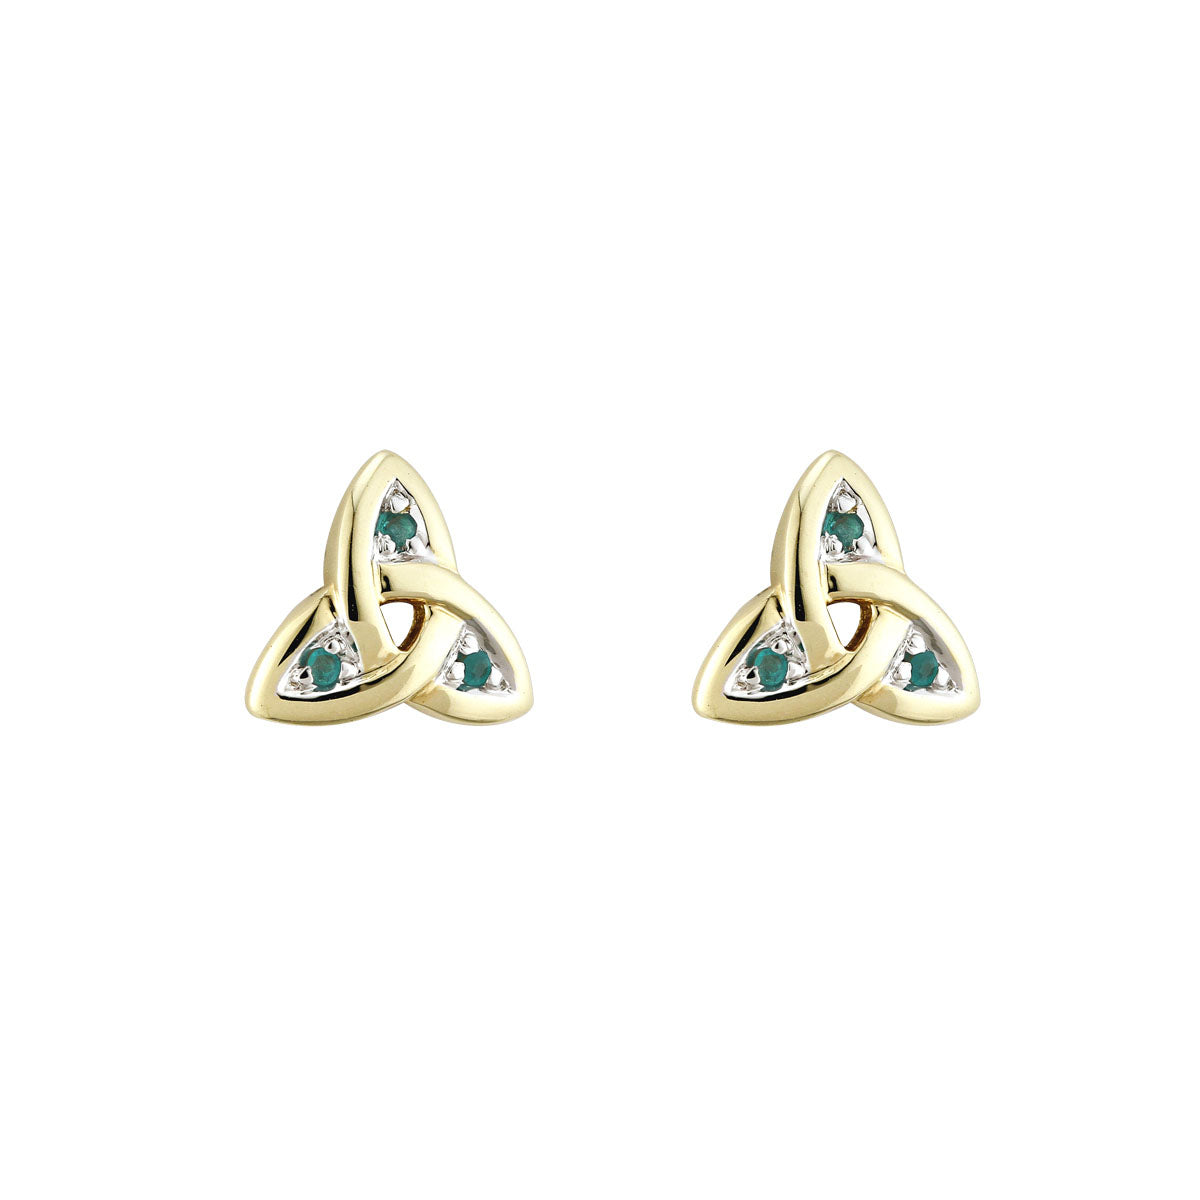 14K gold emerald trinity knot stud earrings s3006 from Solvar